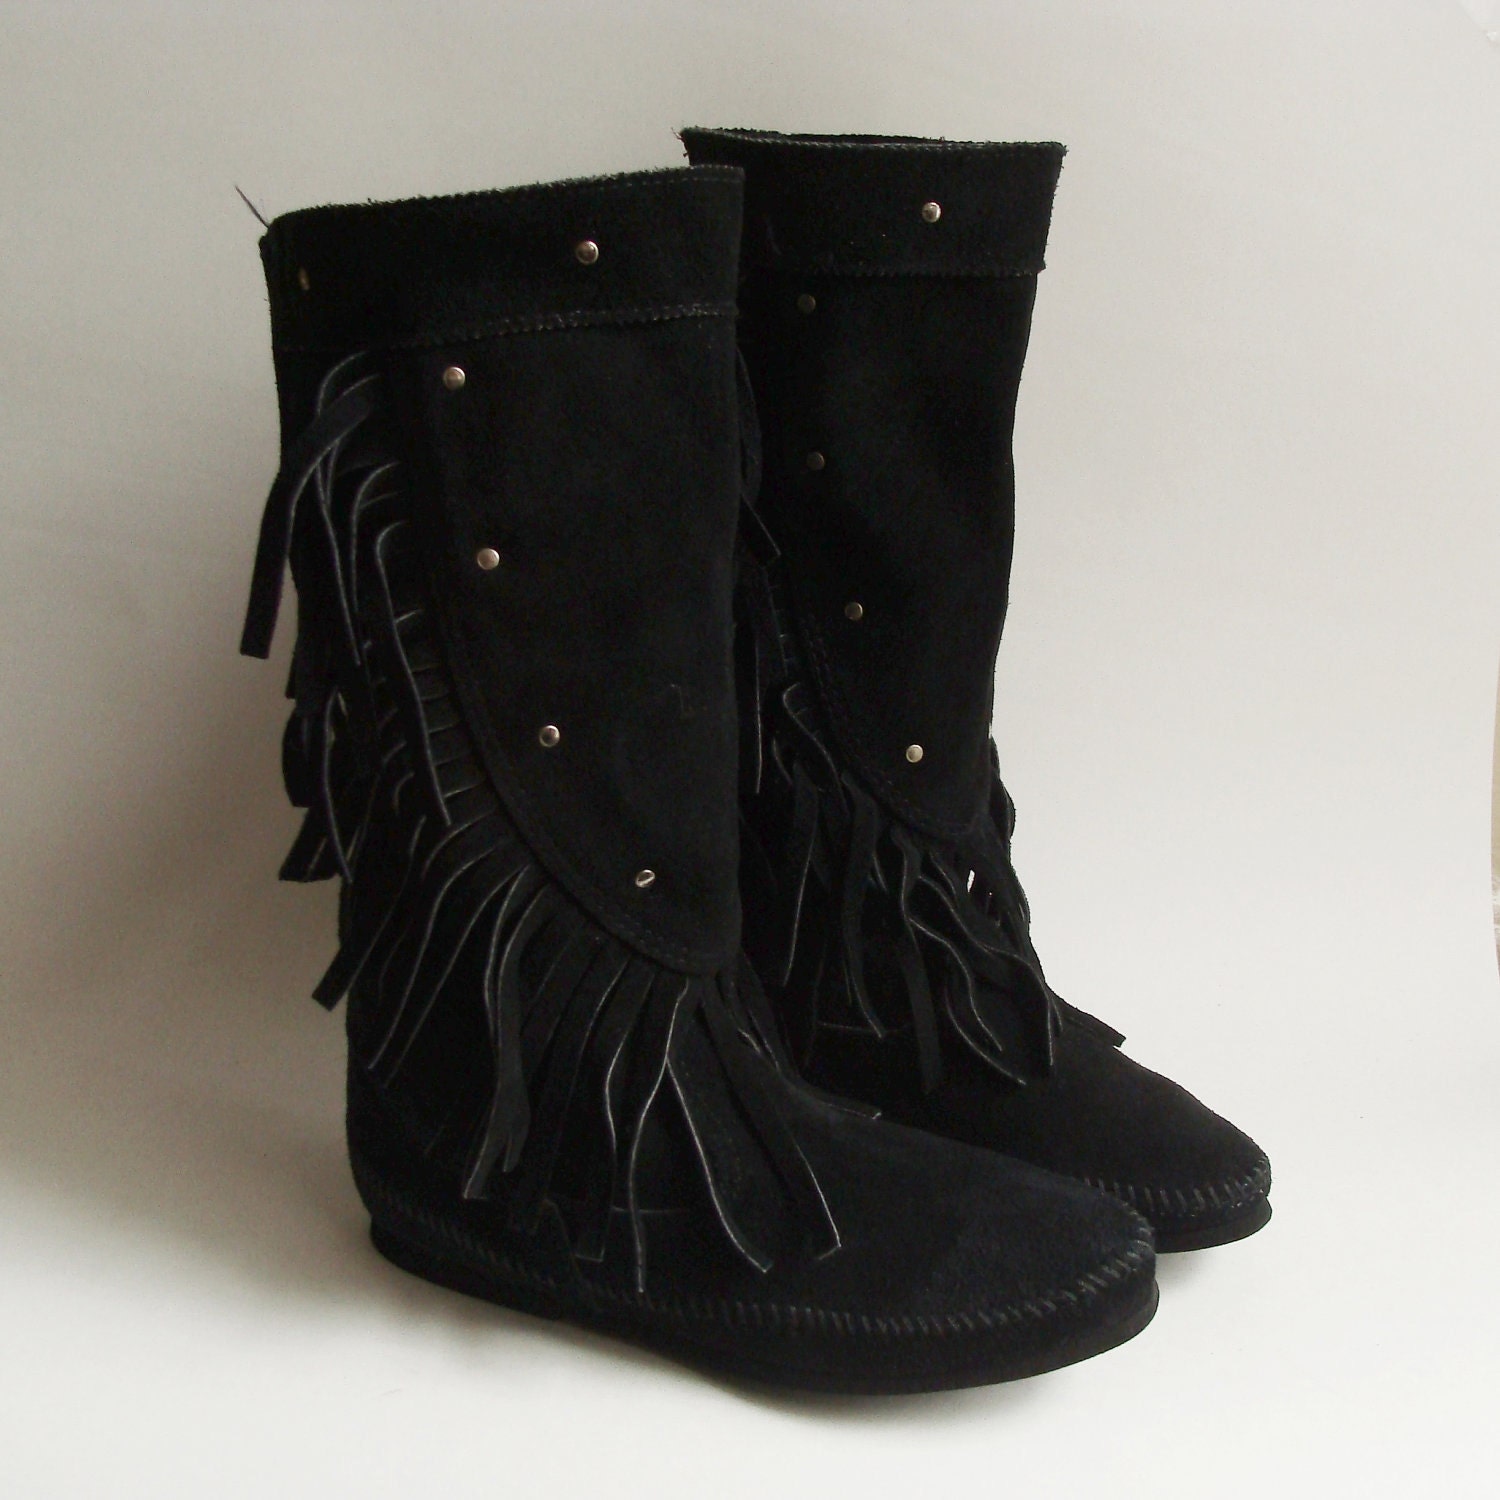 Minnetonka moccasins / shoes 6 / black fringe boots / suede